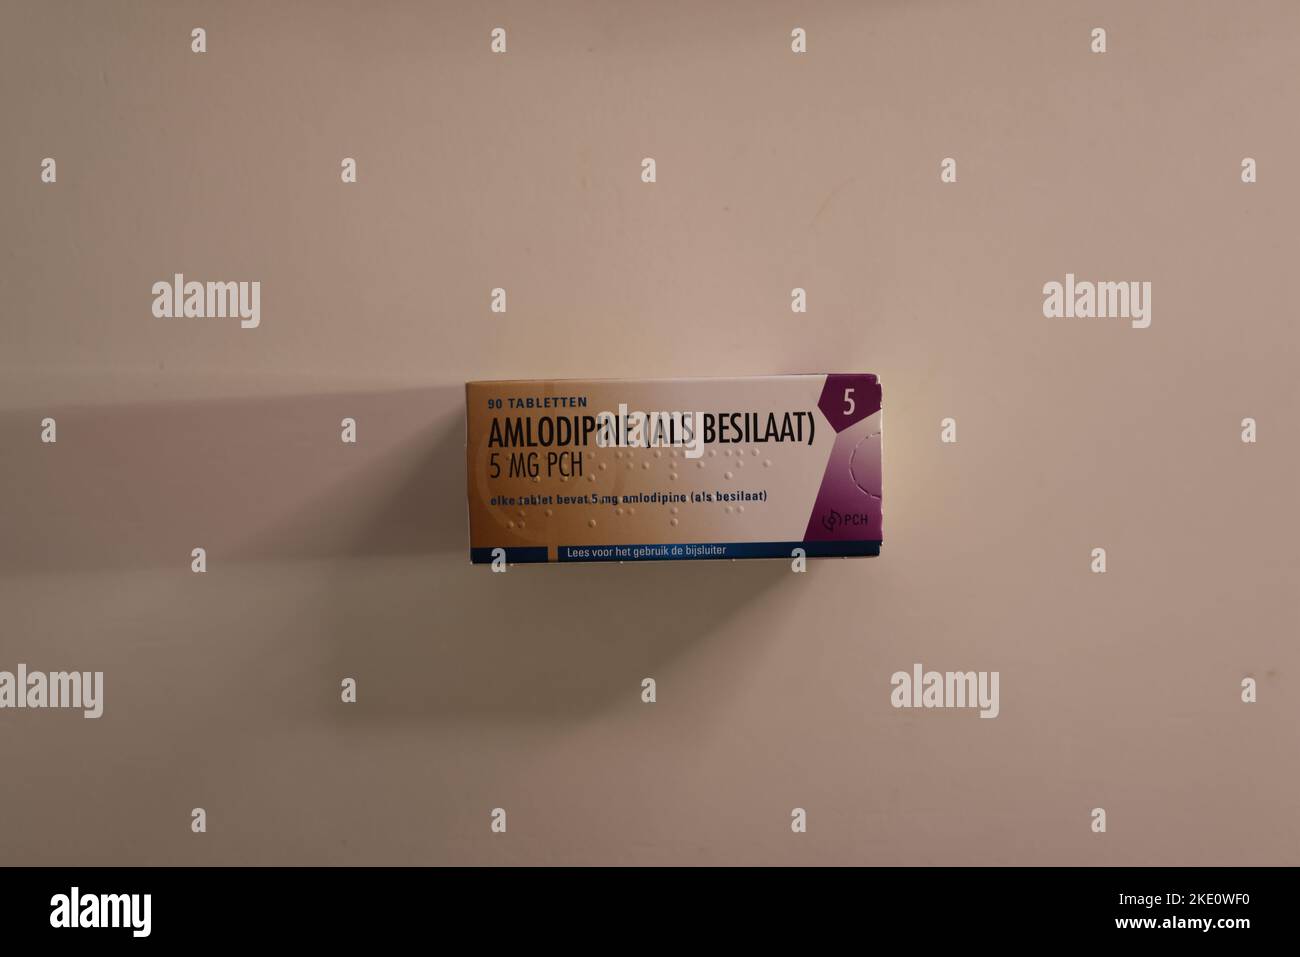 Teva pharmaceuticals fotografías e imágenes de alta resolución - Alamy